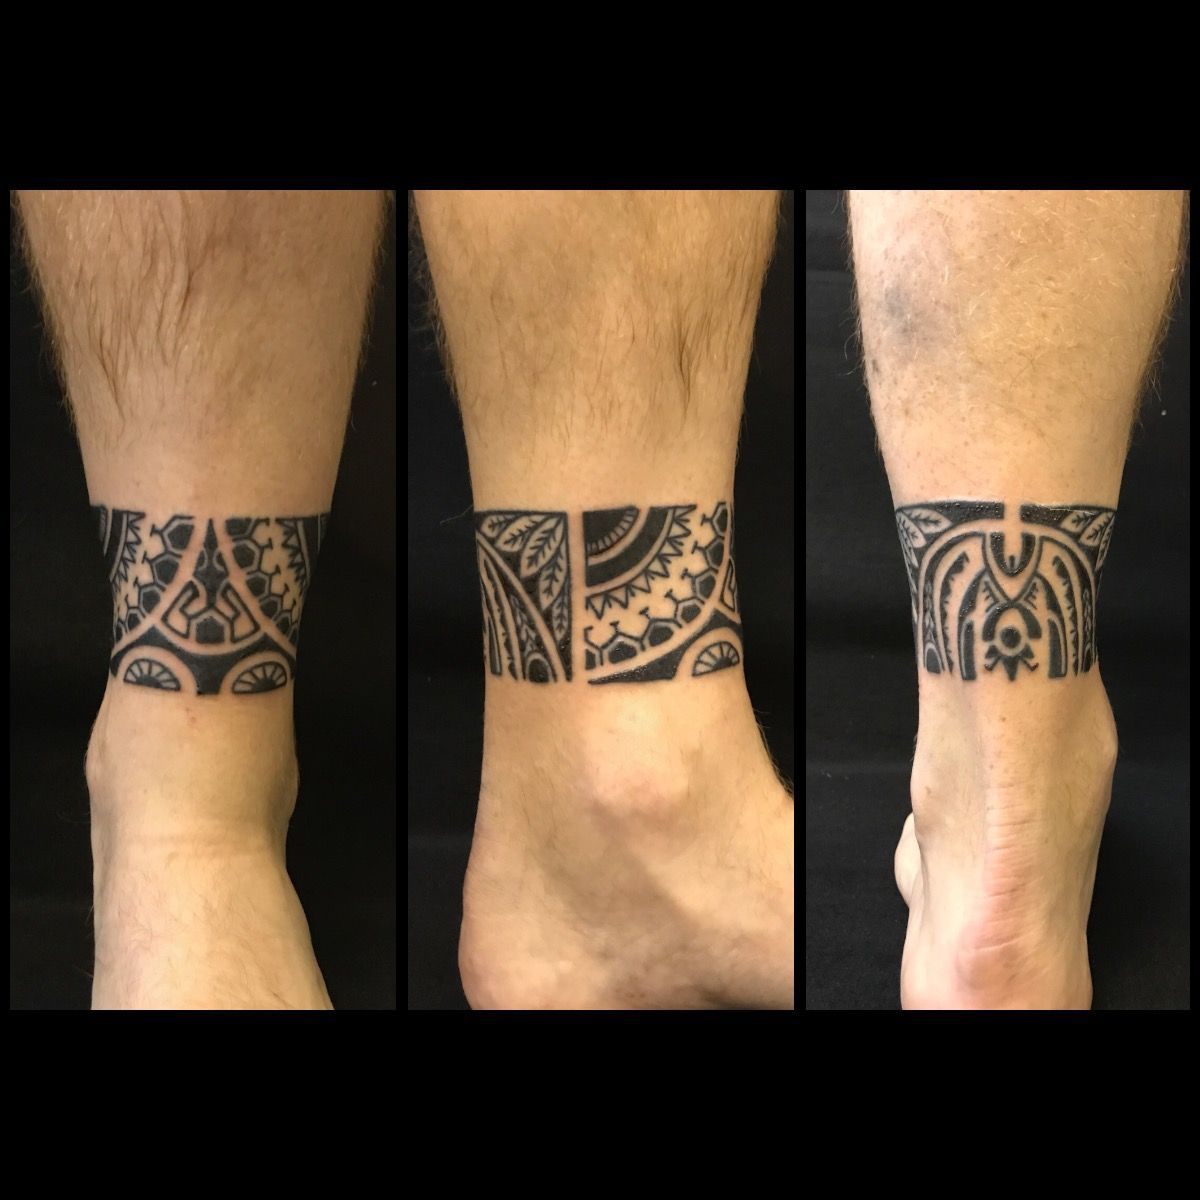 Maoritattoos Maori Tattoos Tattoos Arm Band Tattoo Ankle Tattoo intended for measurements 1200 X 1200